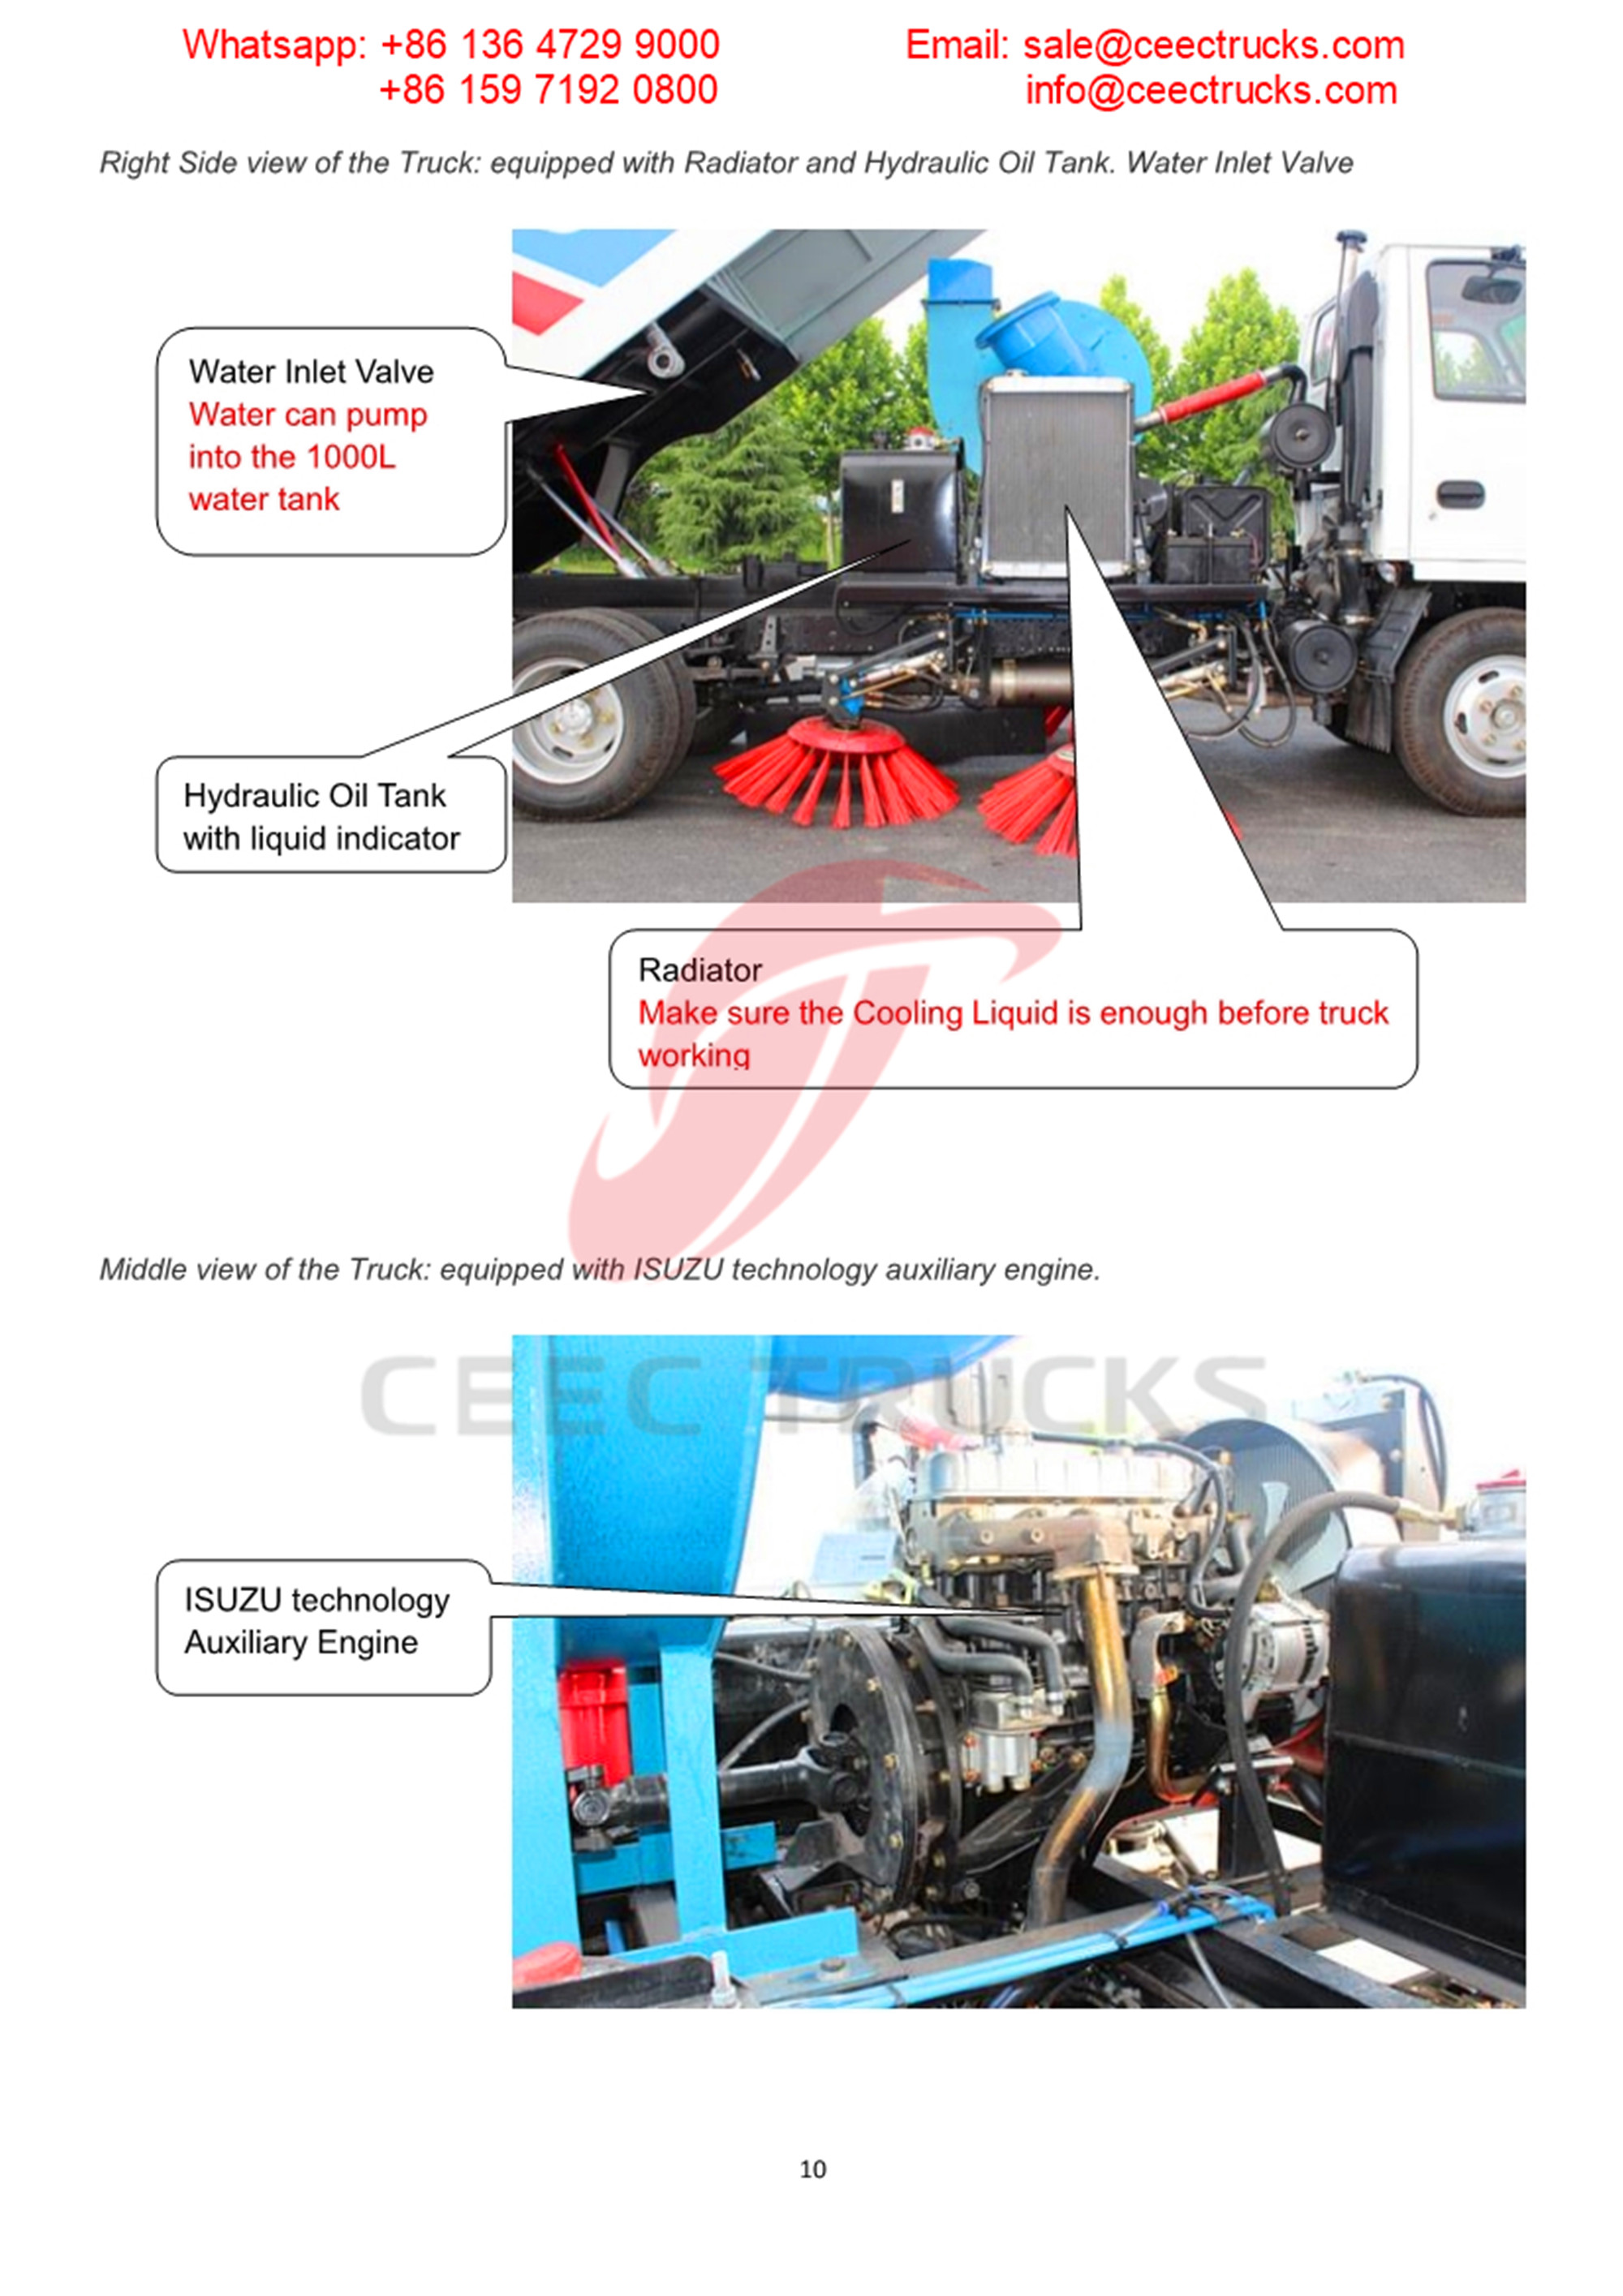 Phillippine customer buy 5CBM isuzu road sweeper truck